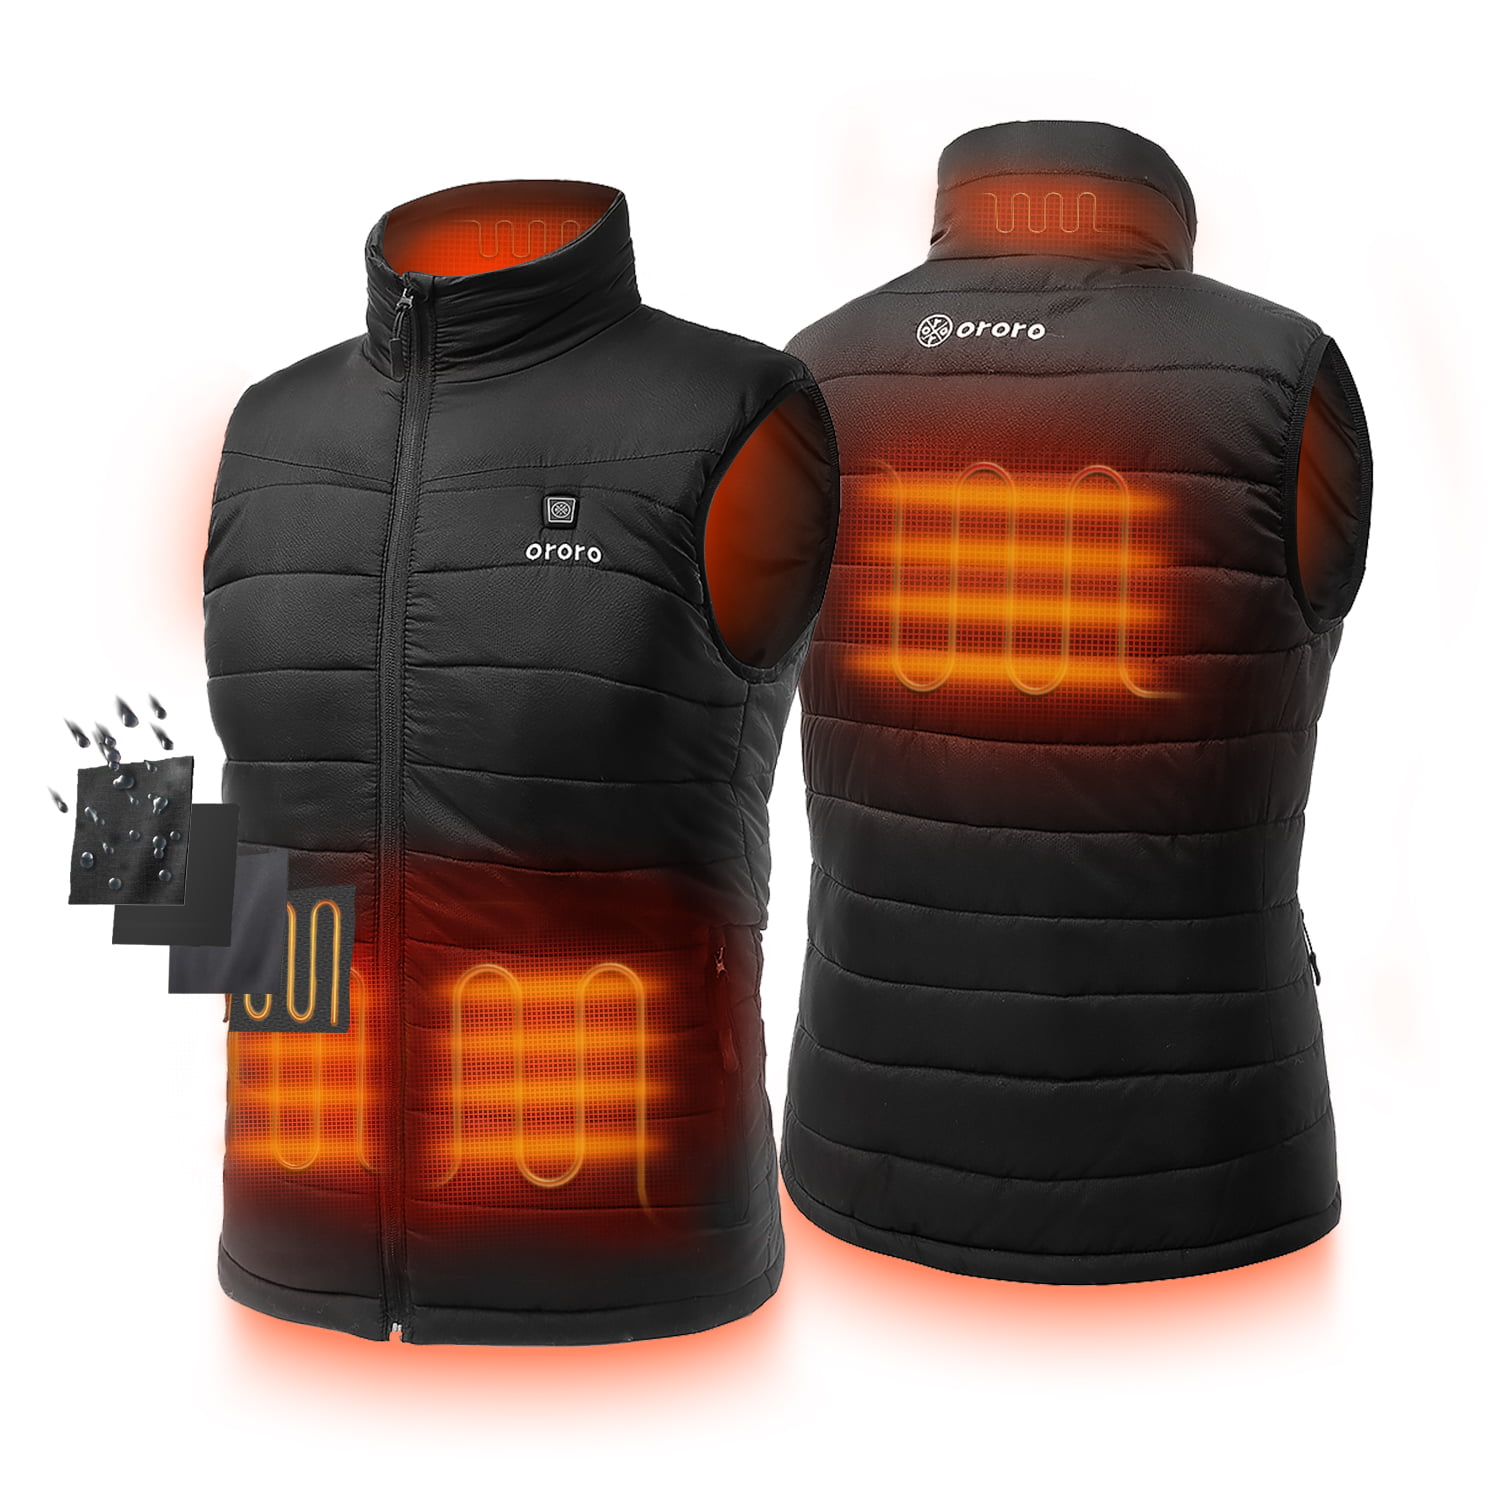 ORORO ORORO Men's Lightweight Heated Vest with Battery Pack Walmart